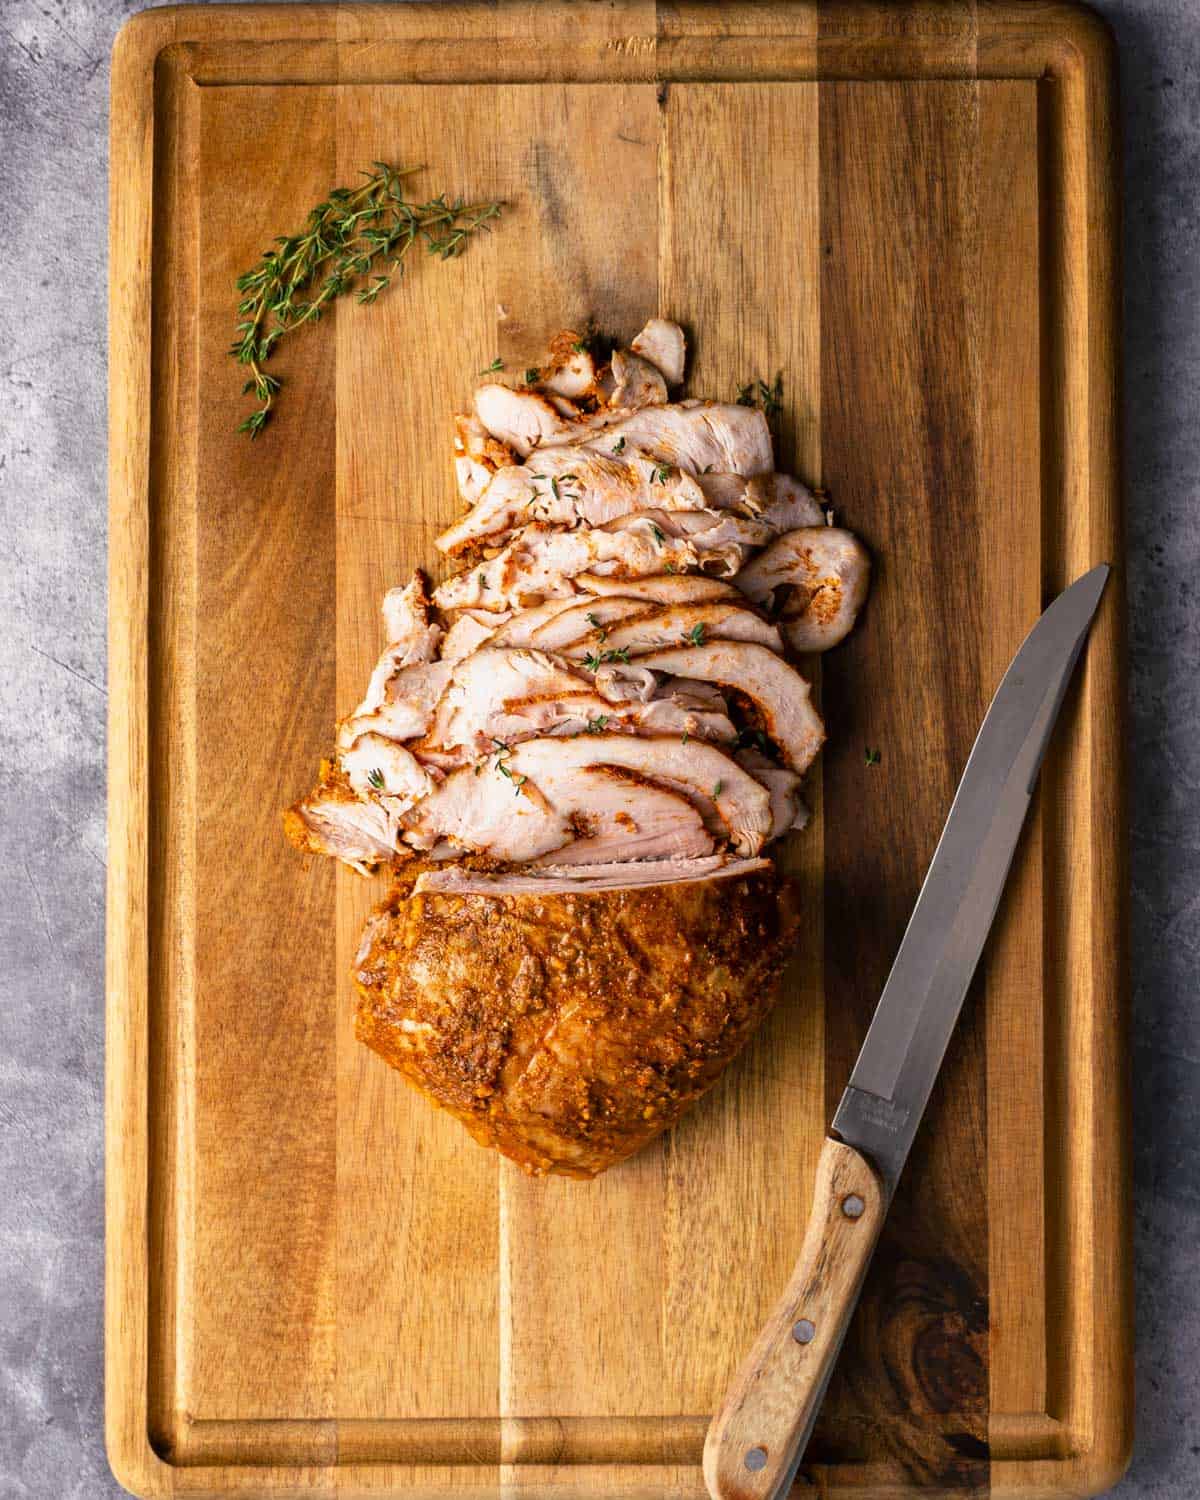 Sous vide cajun turkey breast freshly sliced on a cutting board.